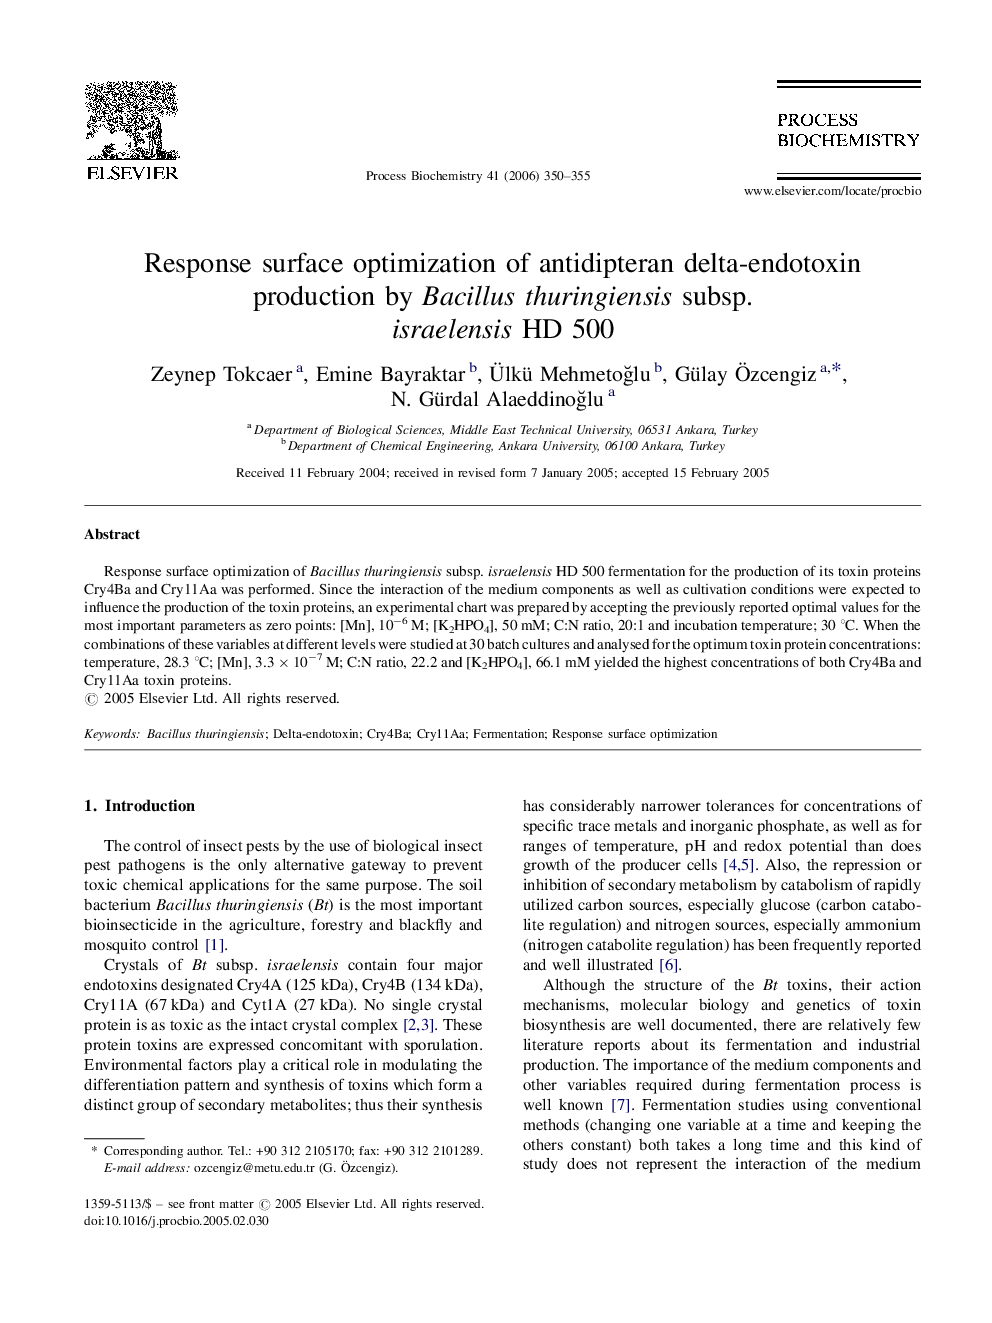 Response surface optimization of antidipteran delta-endotoxin production by Bacillus thuringiensis subsp. israelensis HD 500